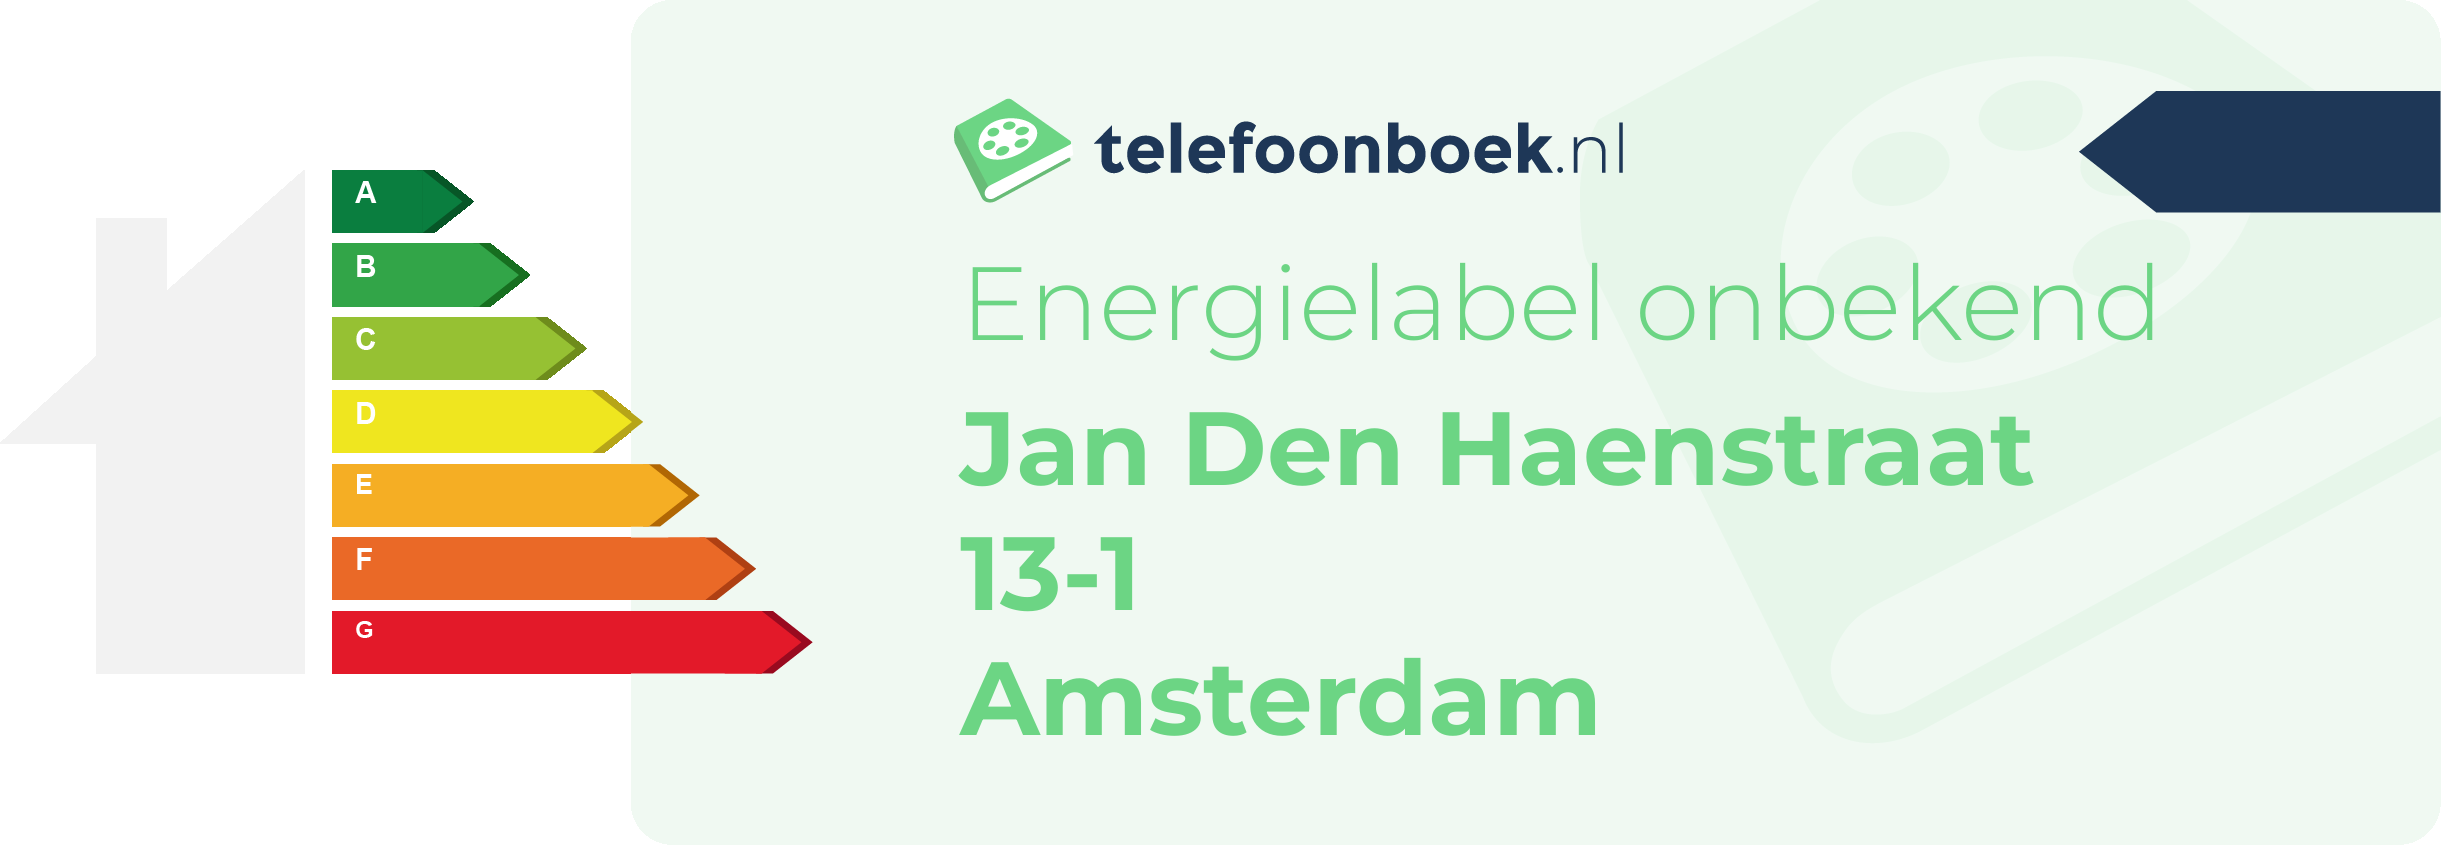 Energielabel Jan Den Haenstraat 13-1 Amsterdam